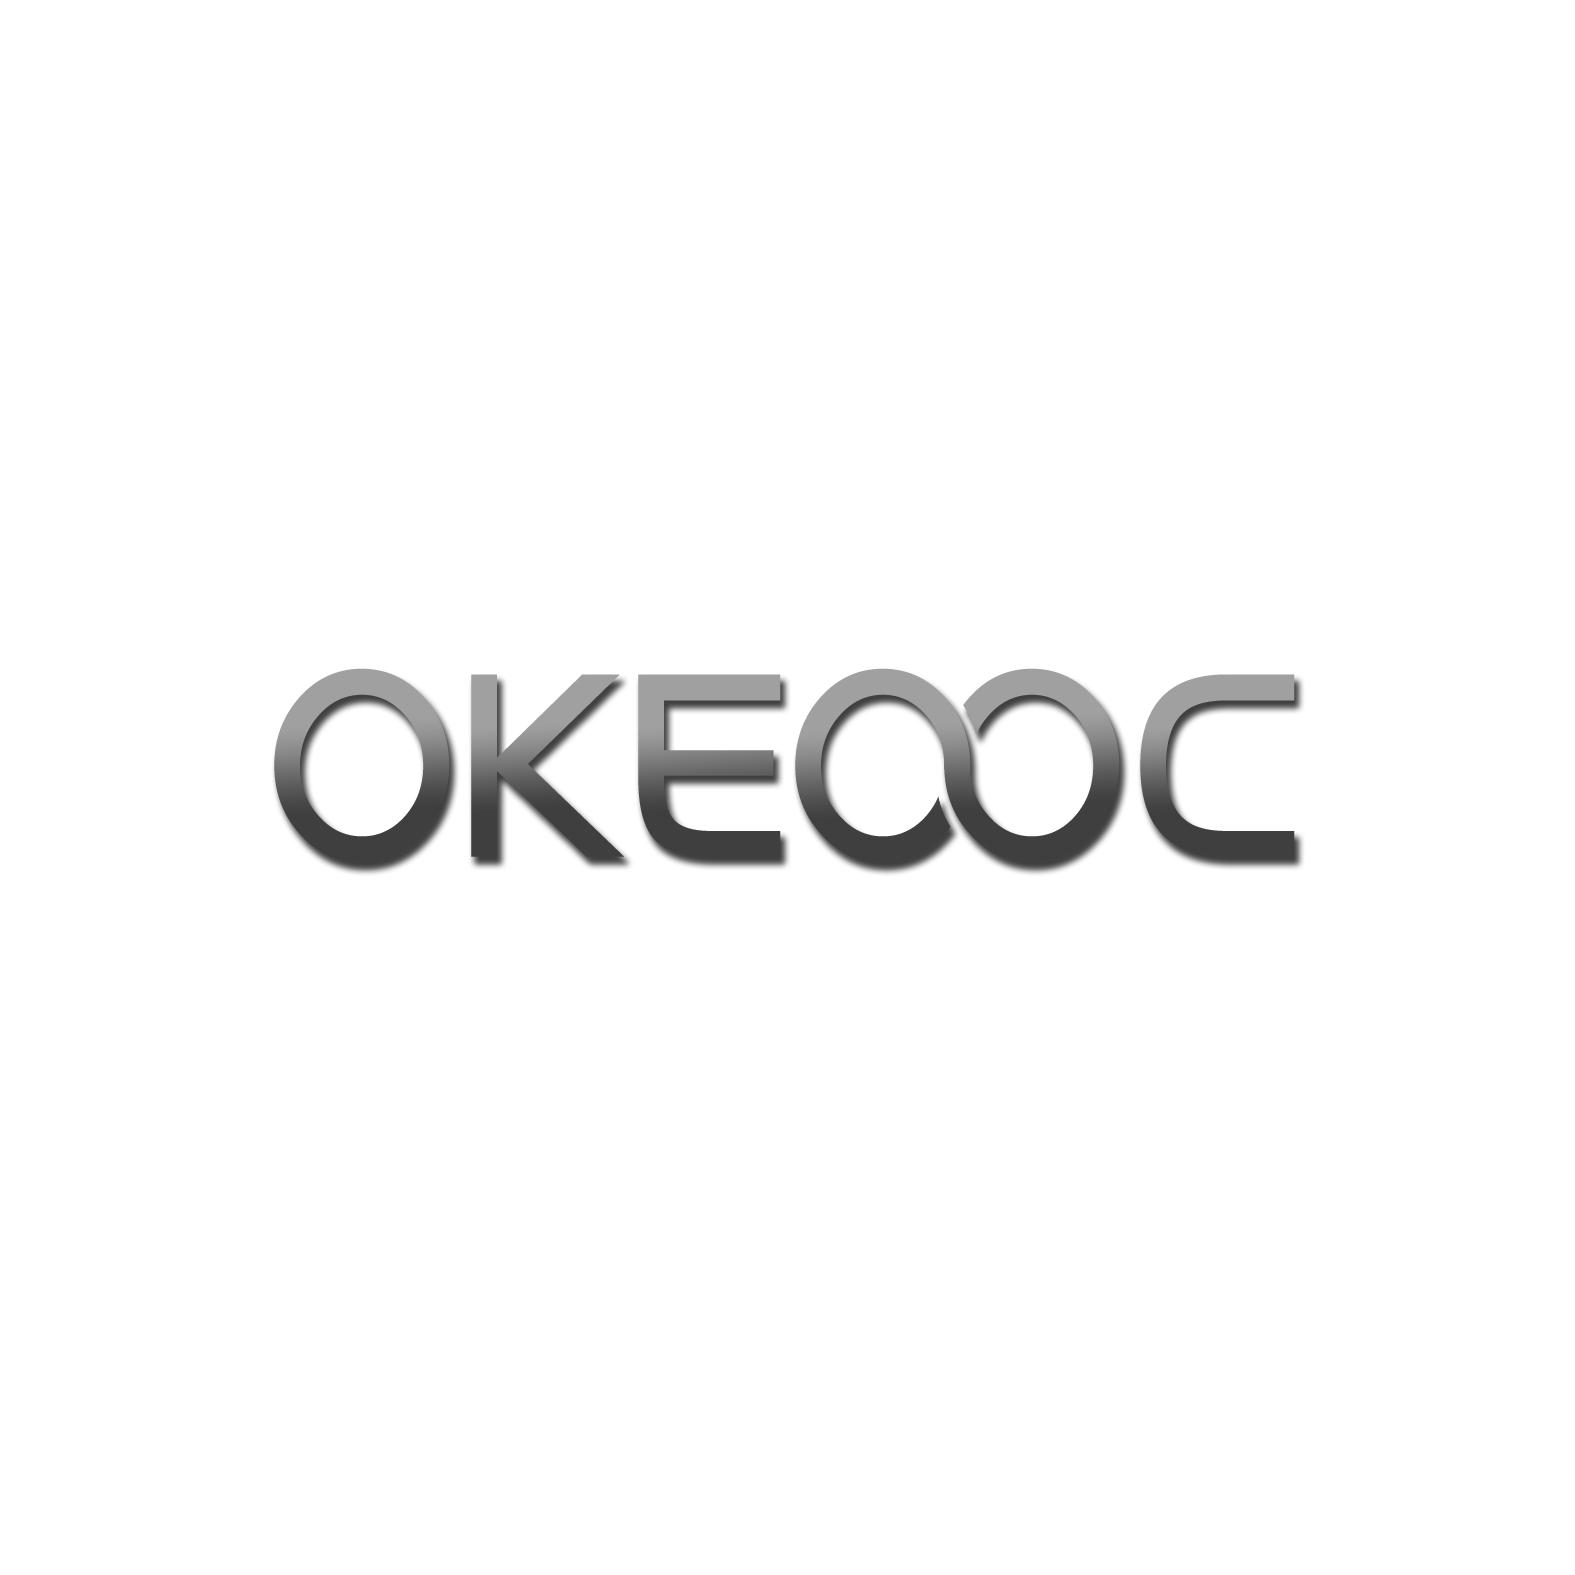 OKEOOC平面设计商标转让费用买卖交易流程